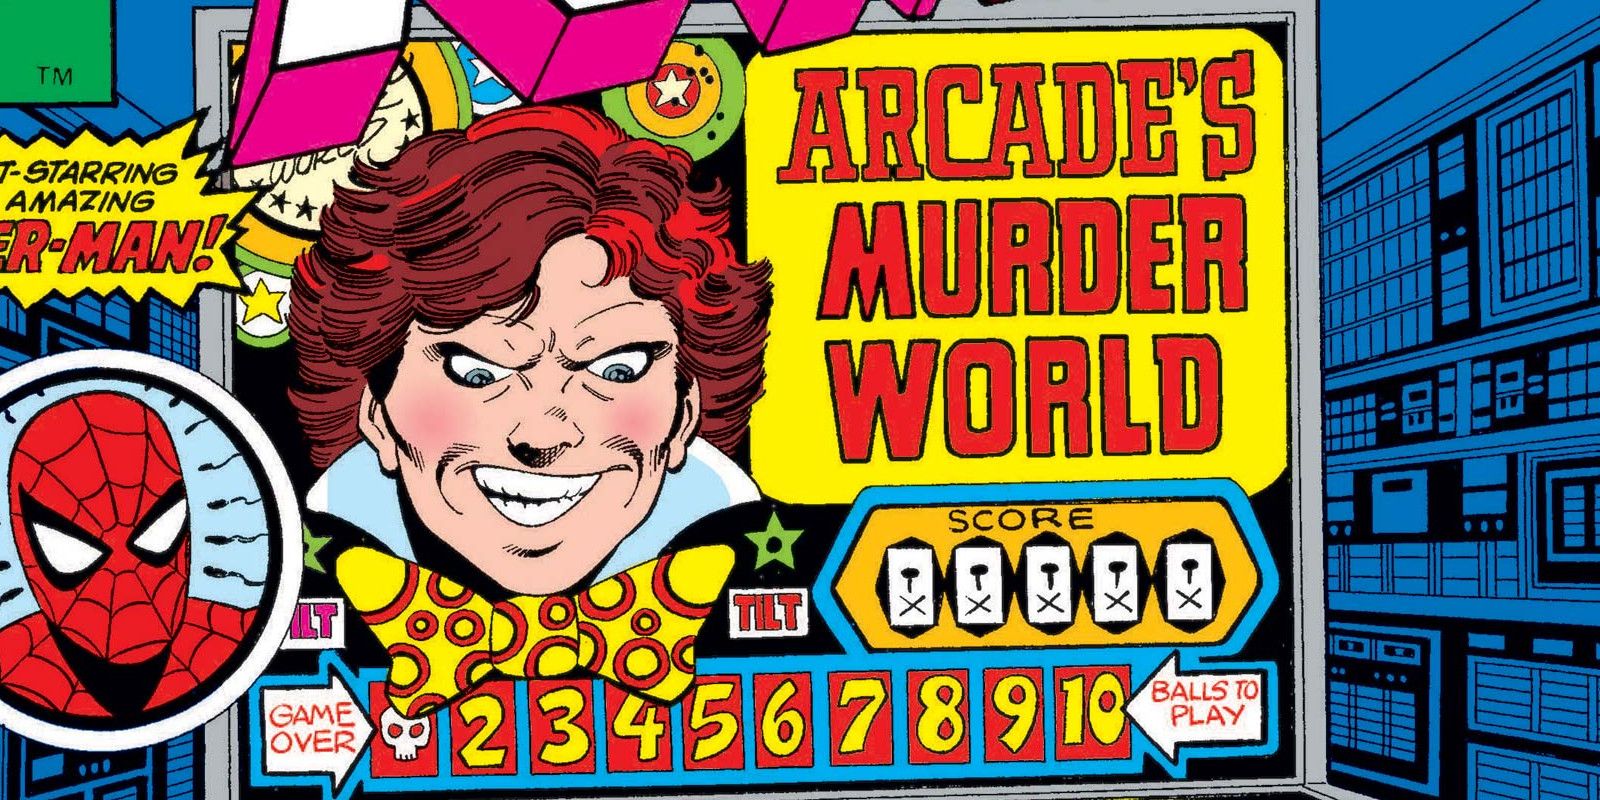 Sign featuring Arcade's Murderworld in X-Men comics. 